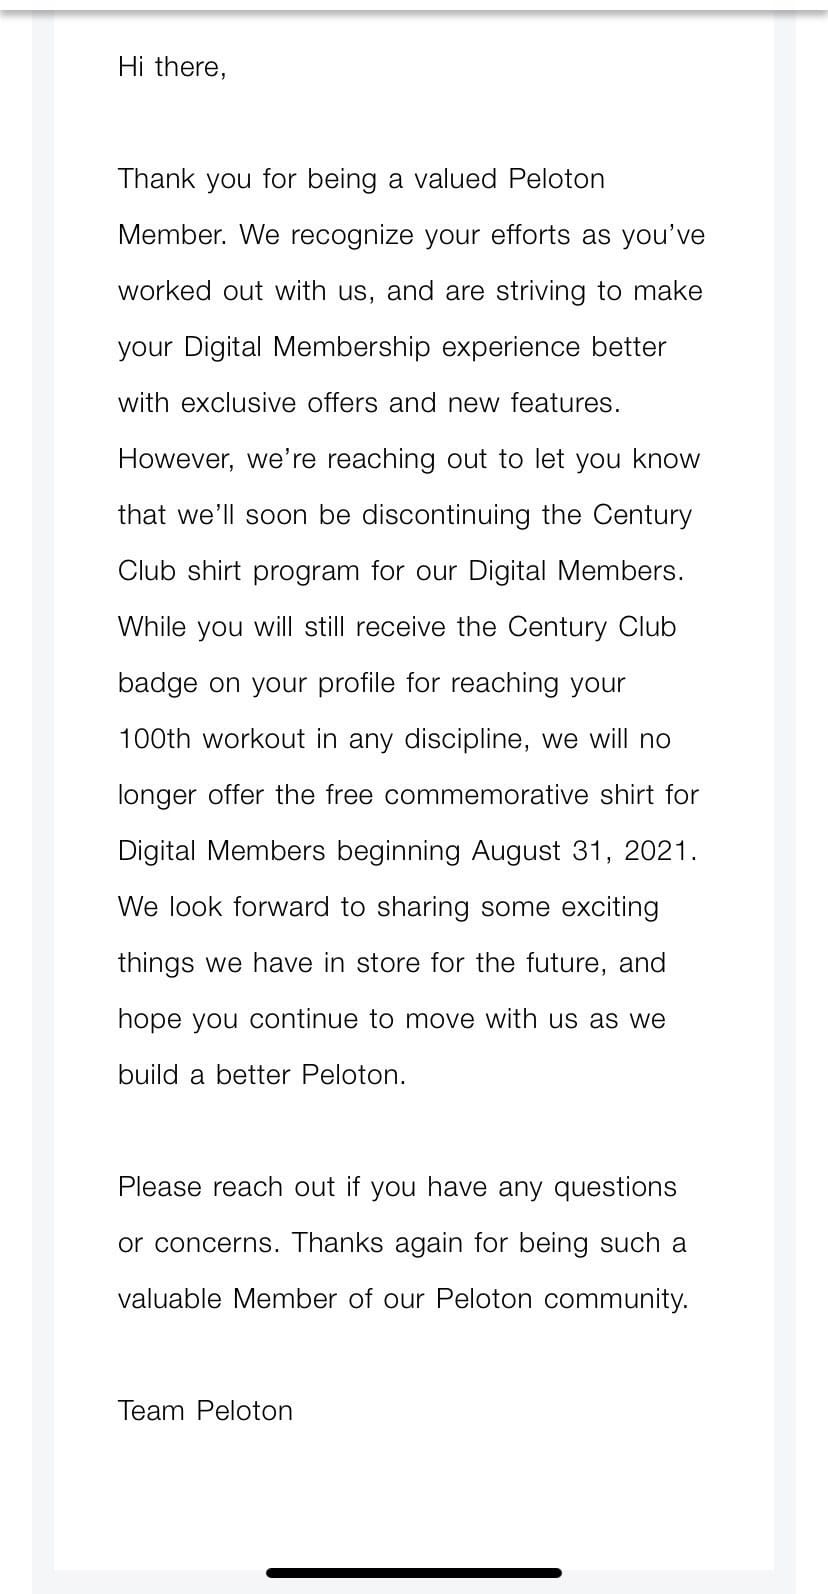 Email sent from Peloton regarding Century Club shirts for Digital members.